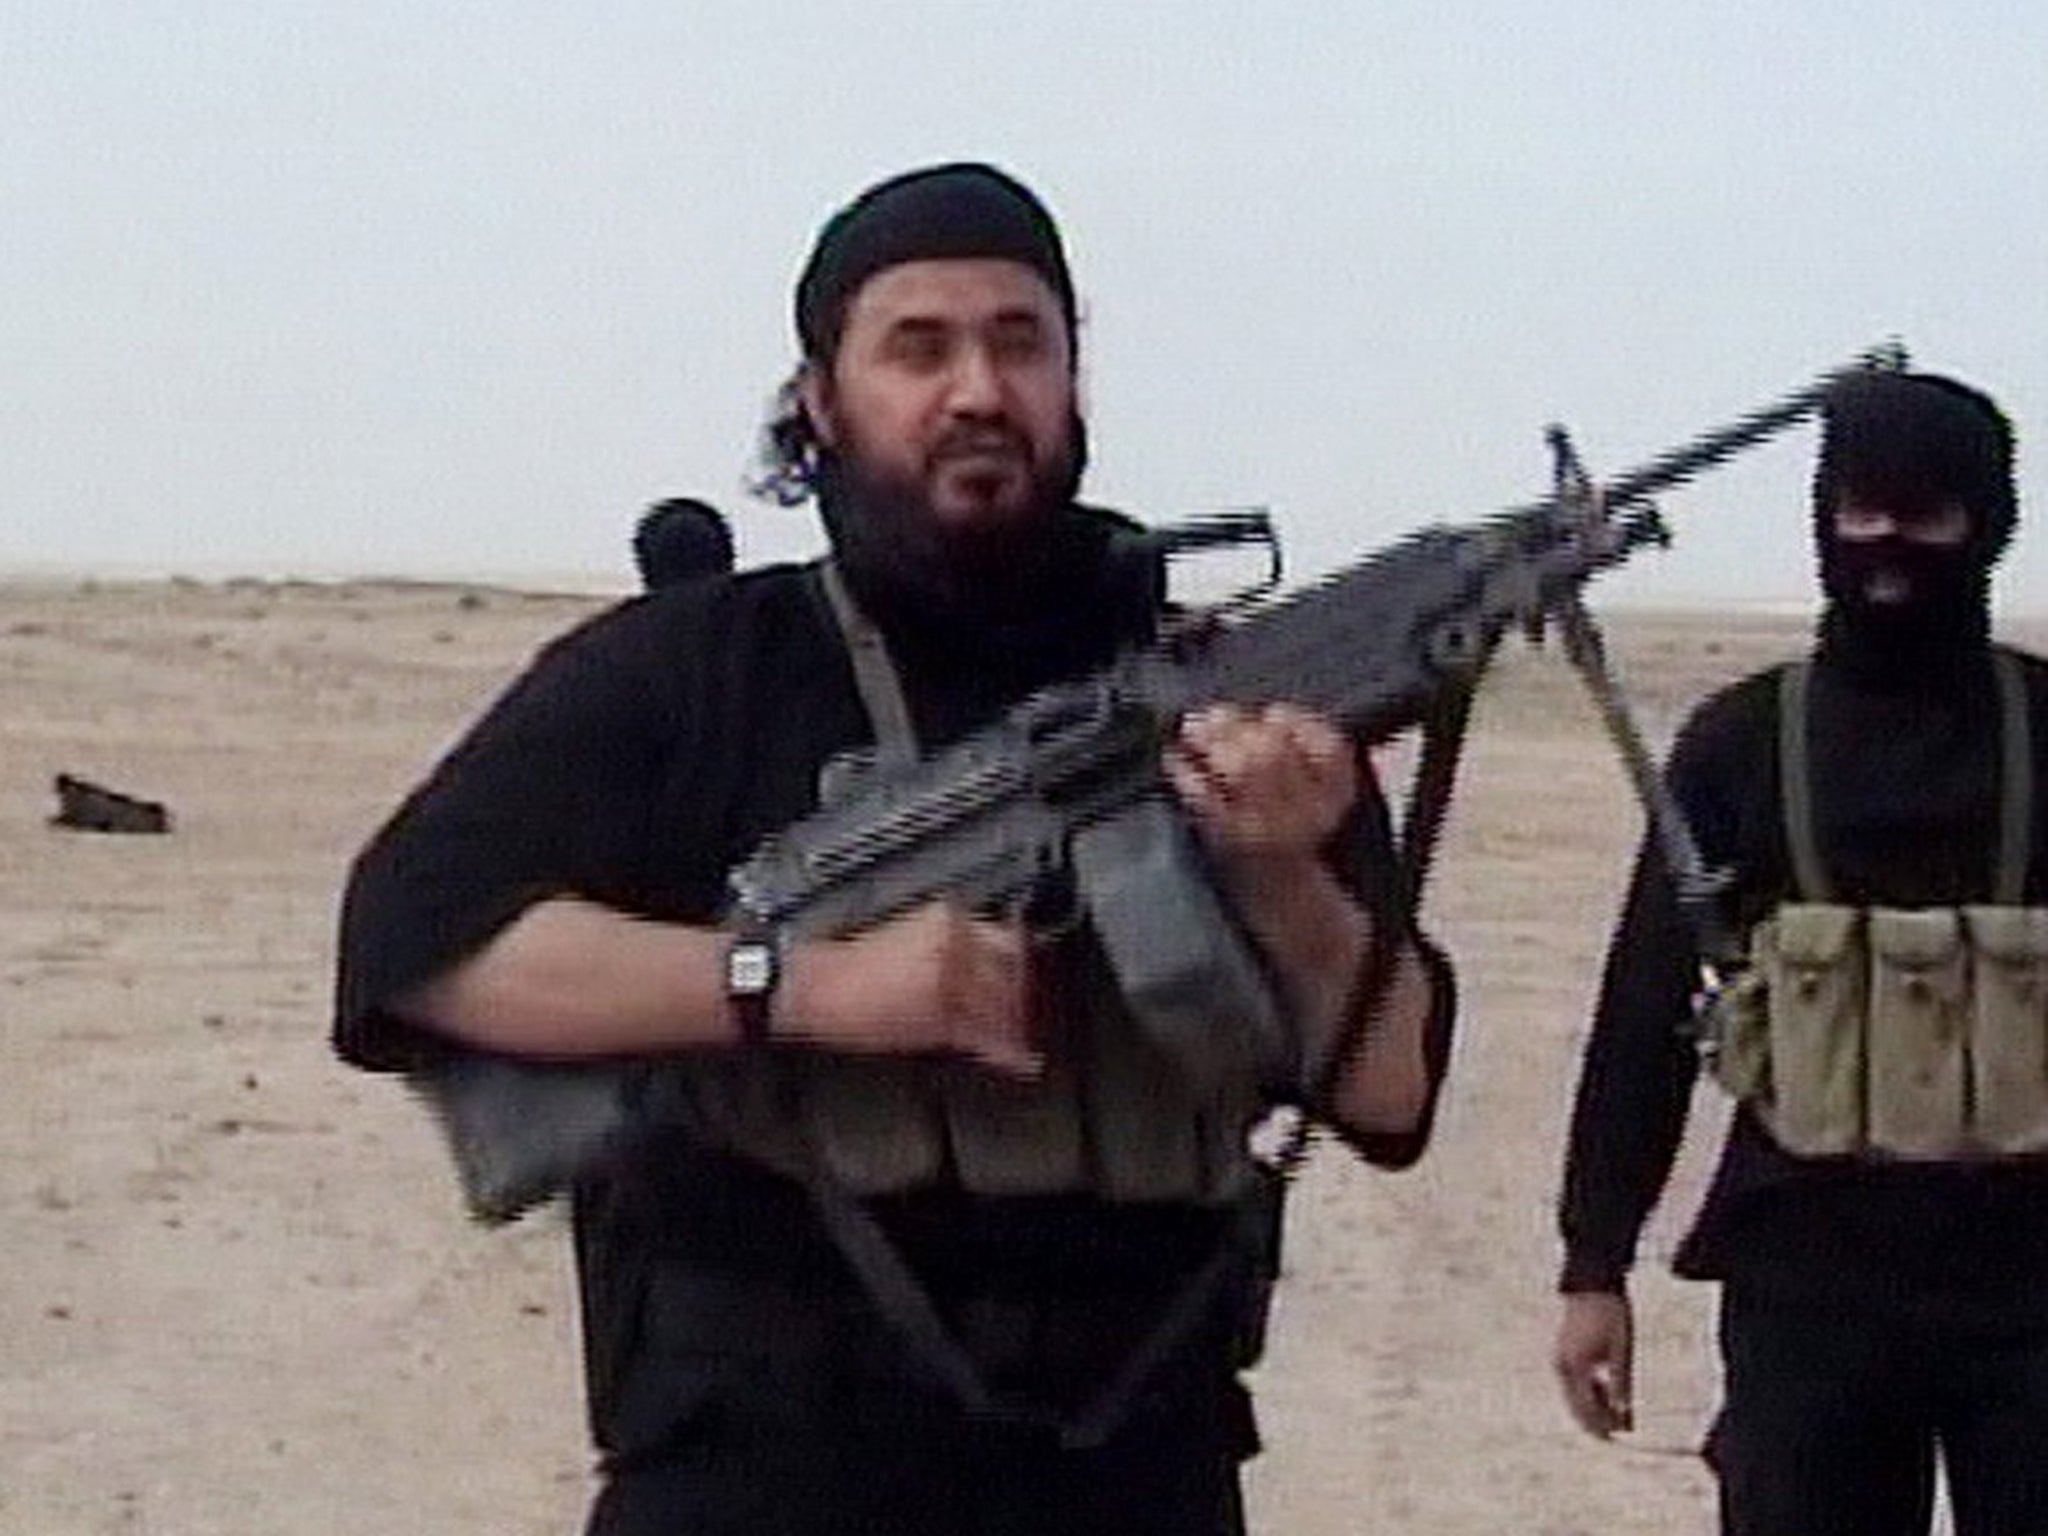 Abu Musab al-Zarqawi recruited Baathists